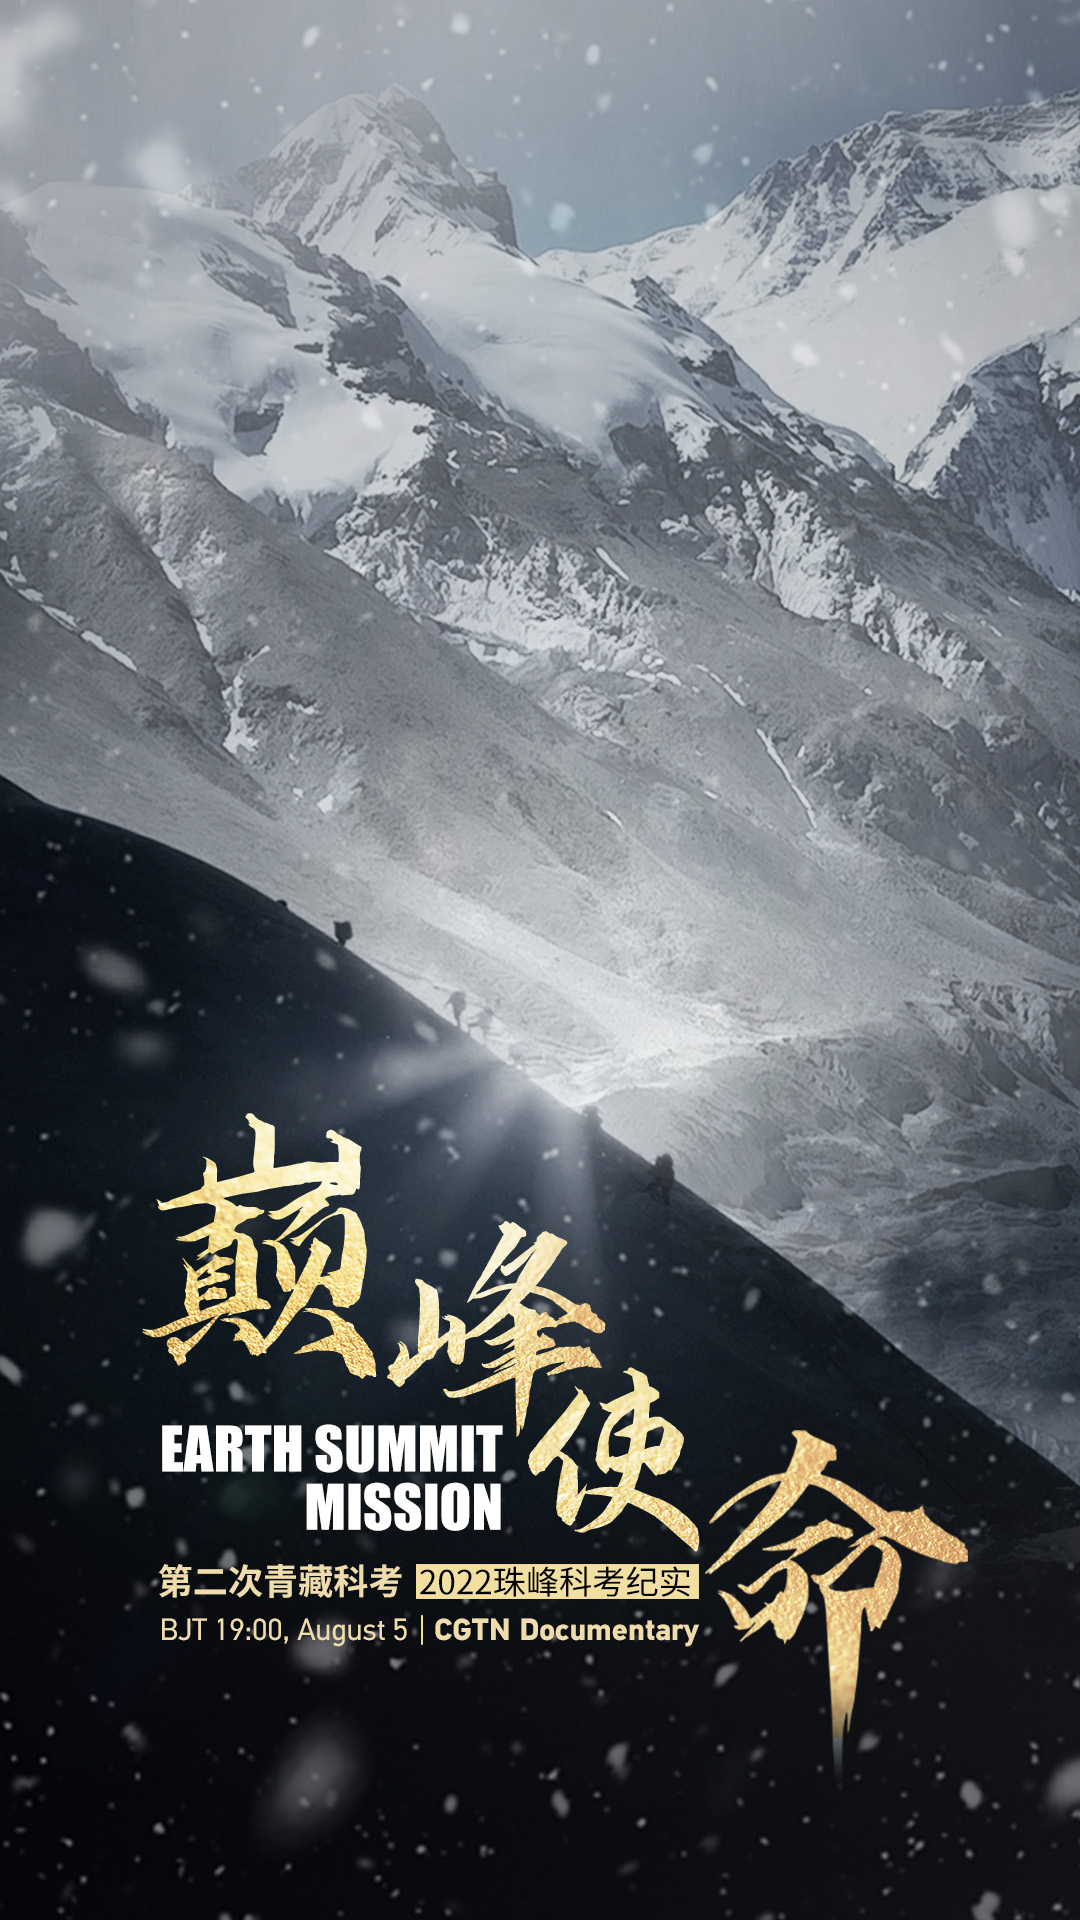 'Earth Summit Mission' documentary